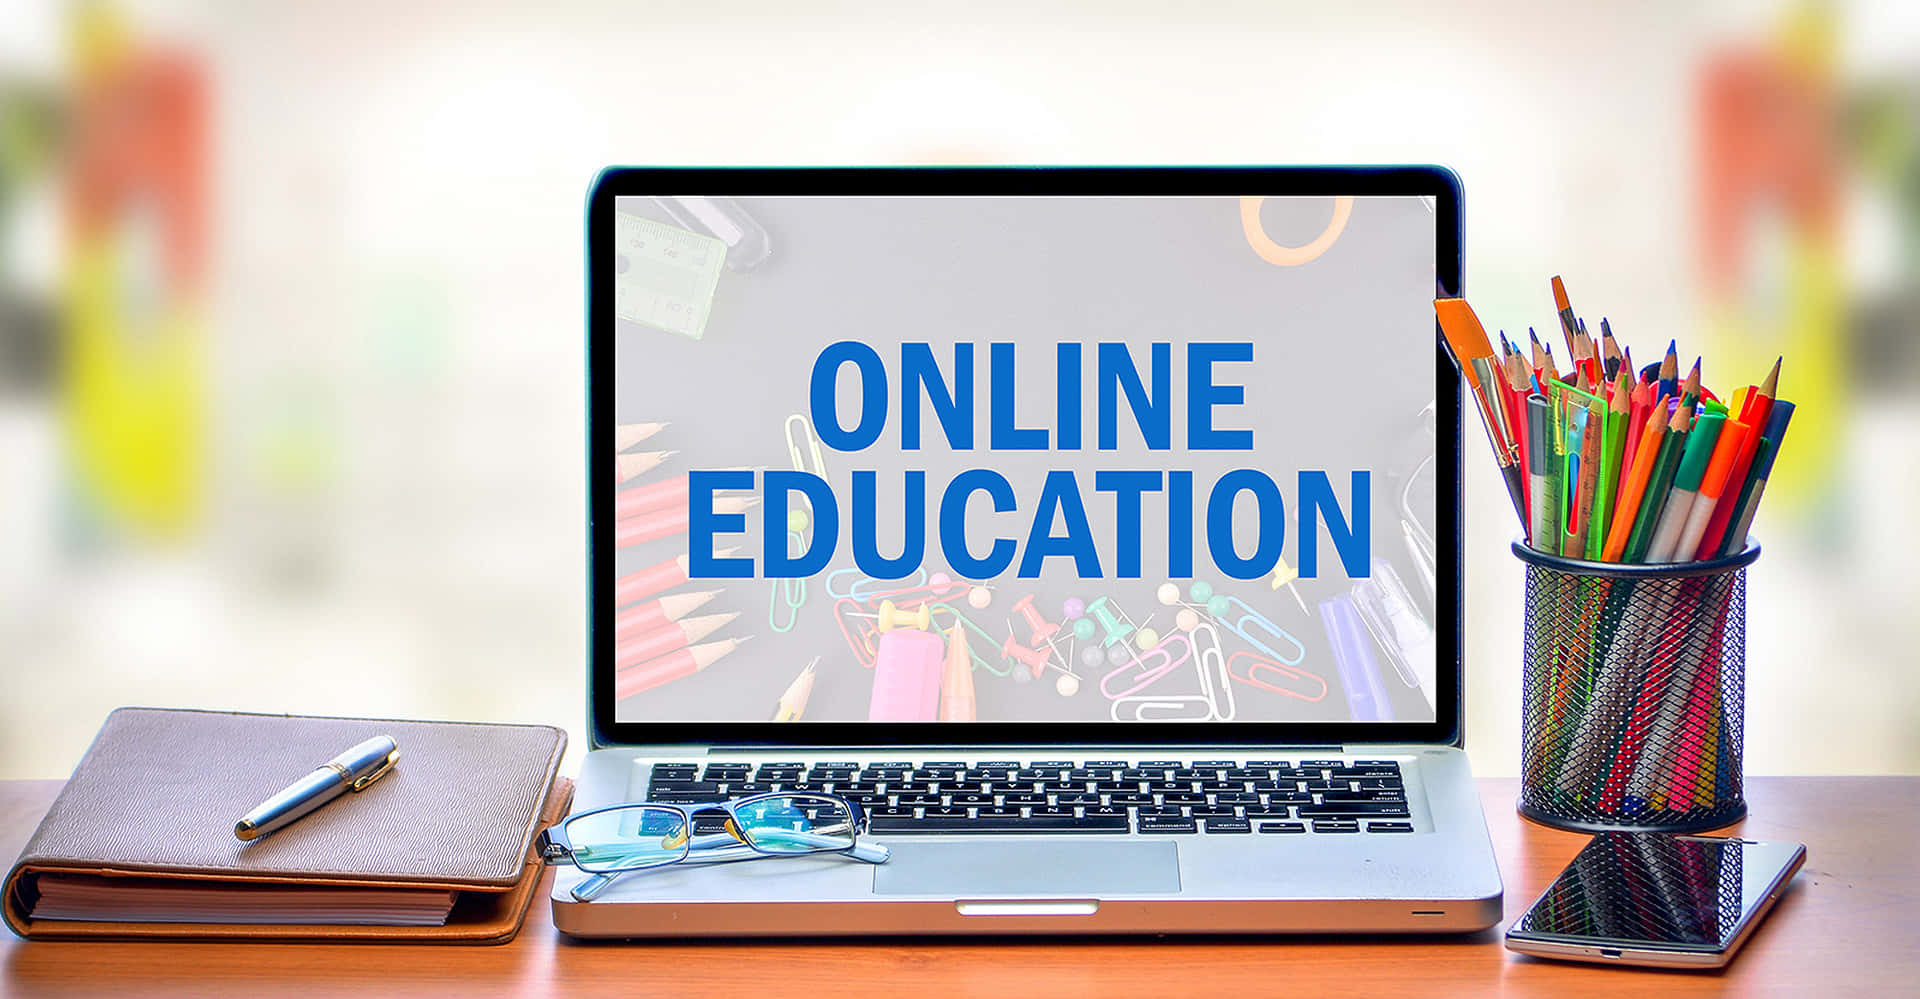 Onlineuddannelse - En Bærbar Computer Med Ordene Online-uddannelse På Skærmen.